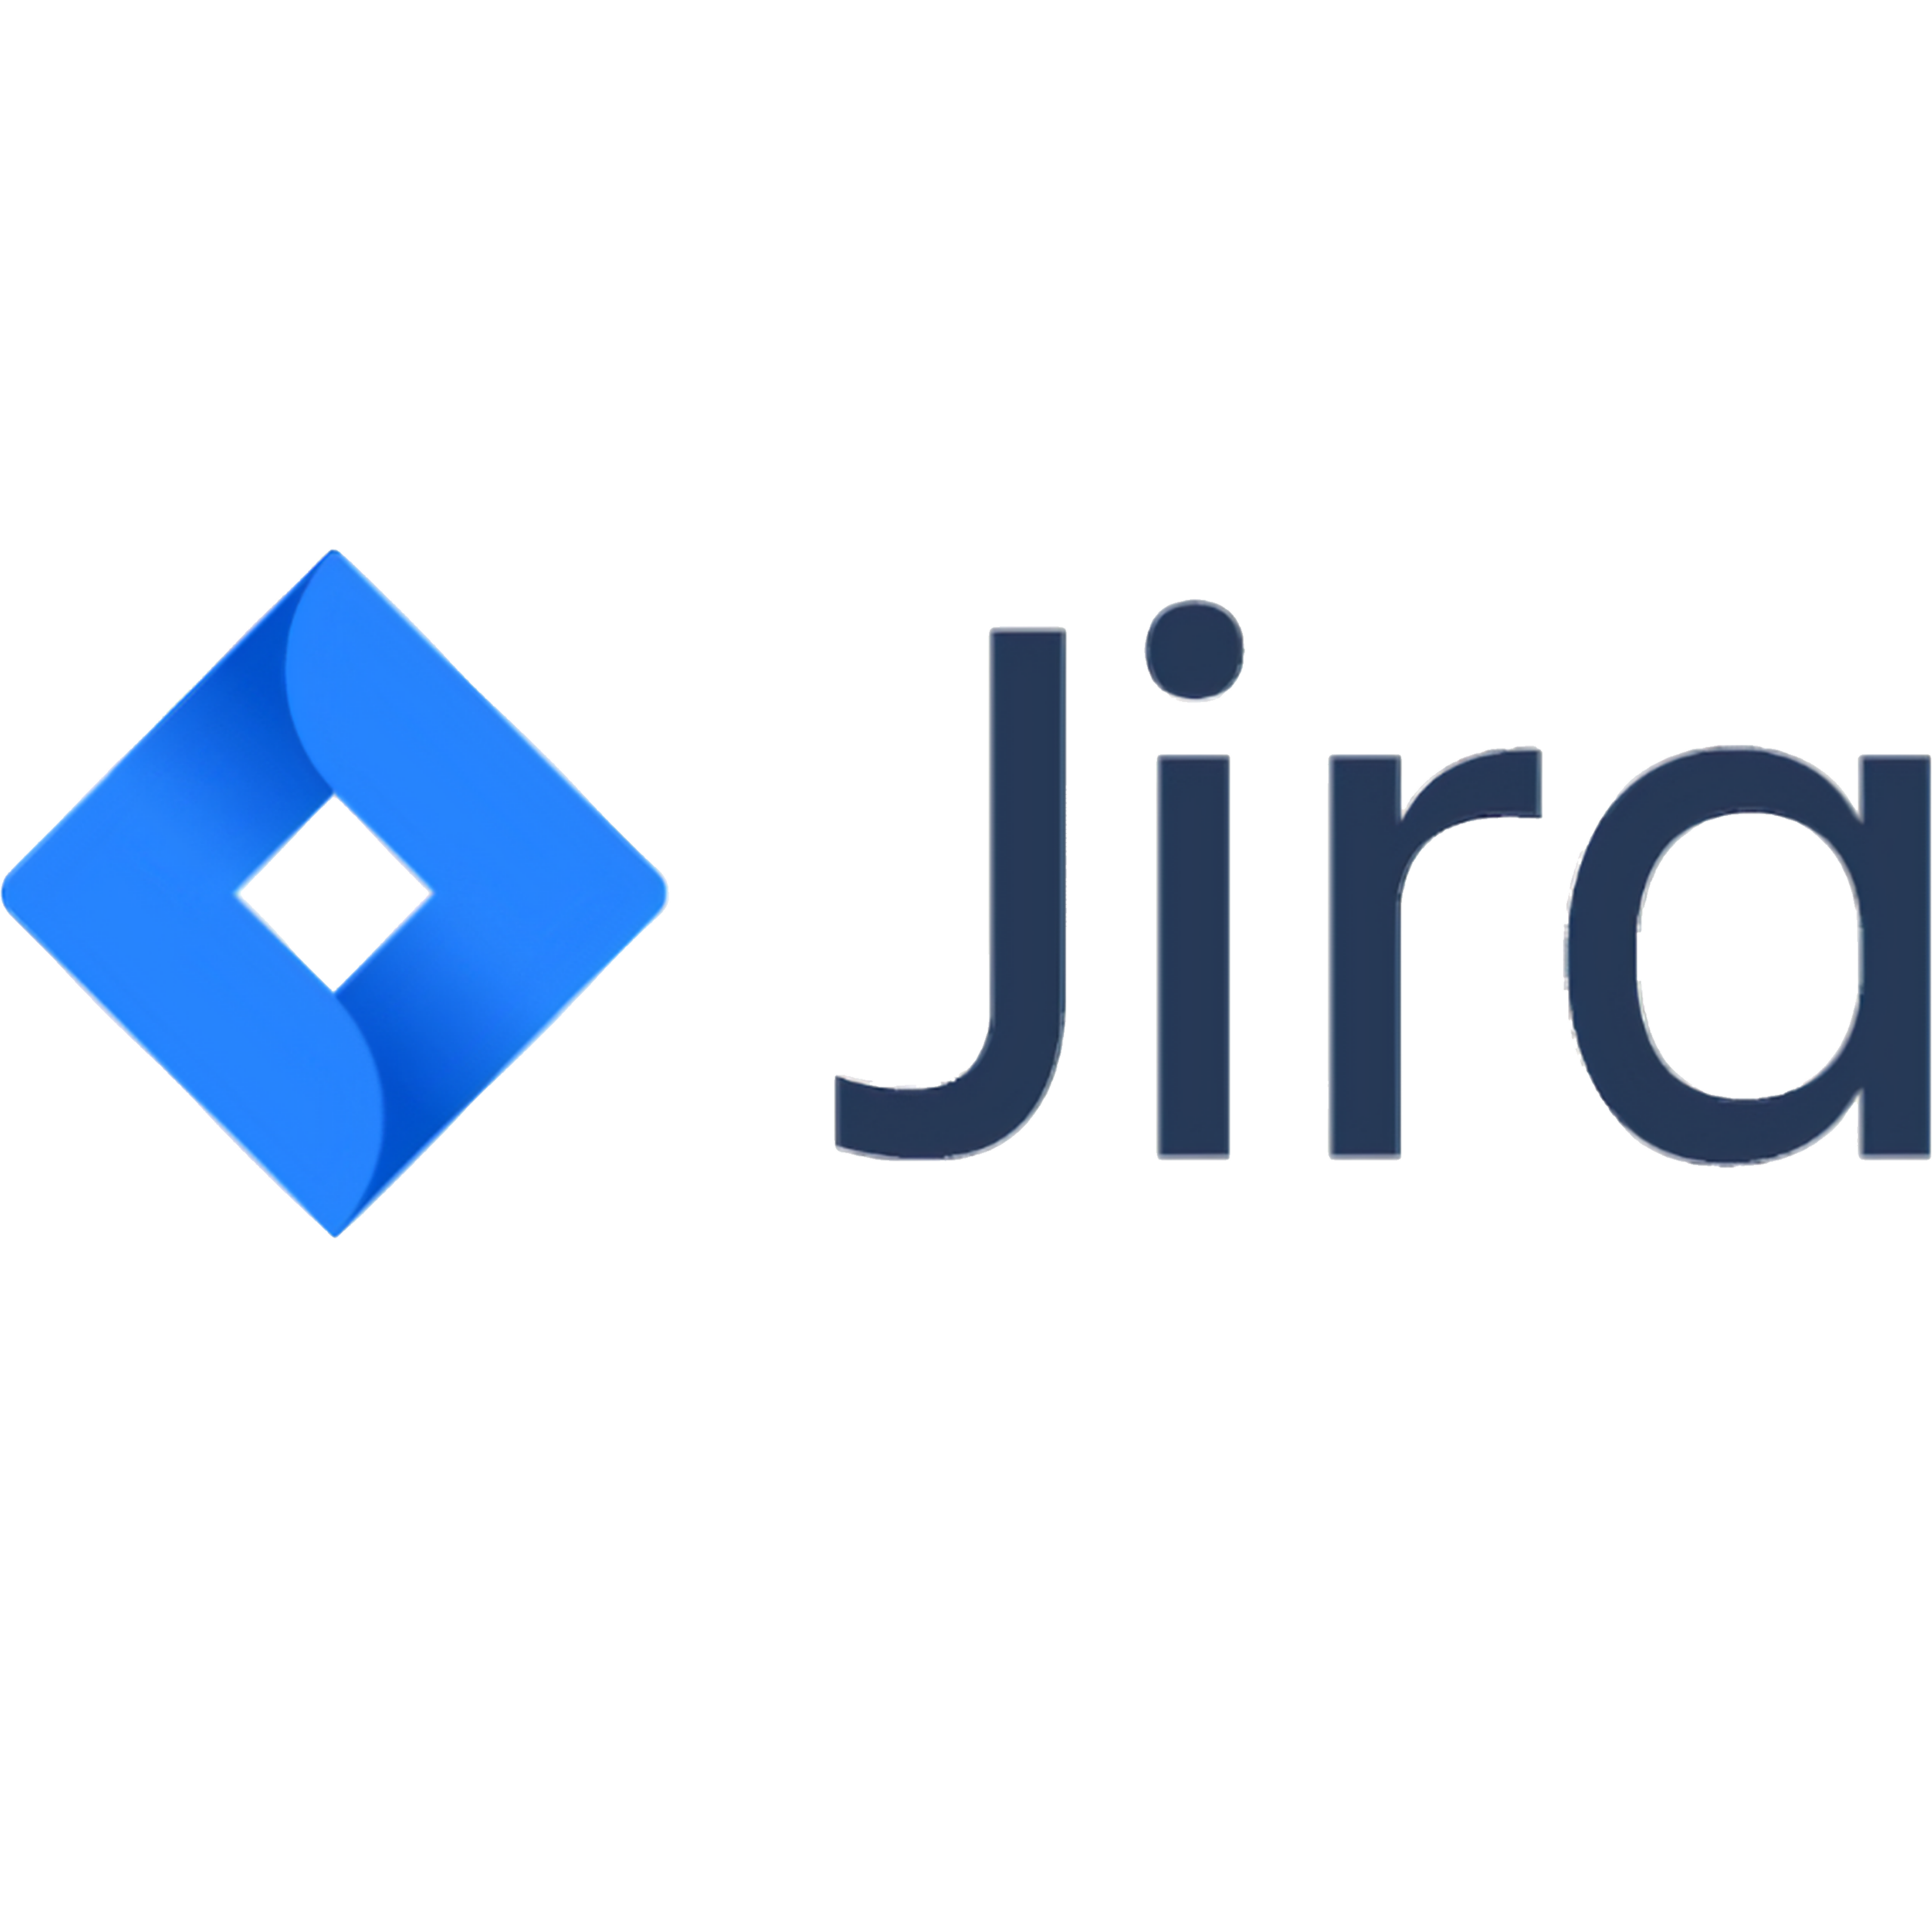 Software funtional testing - Jira